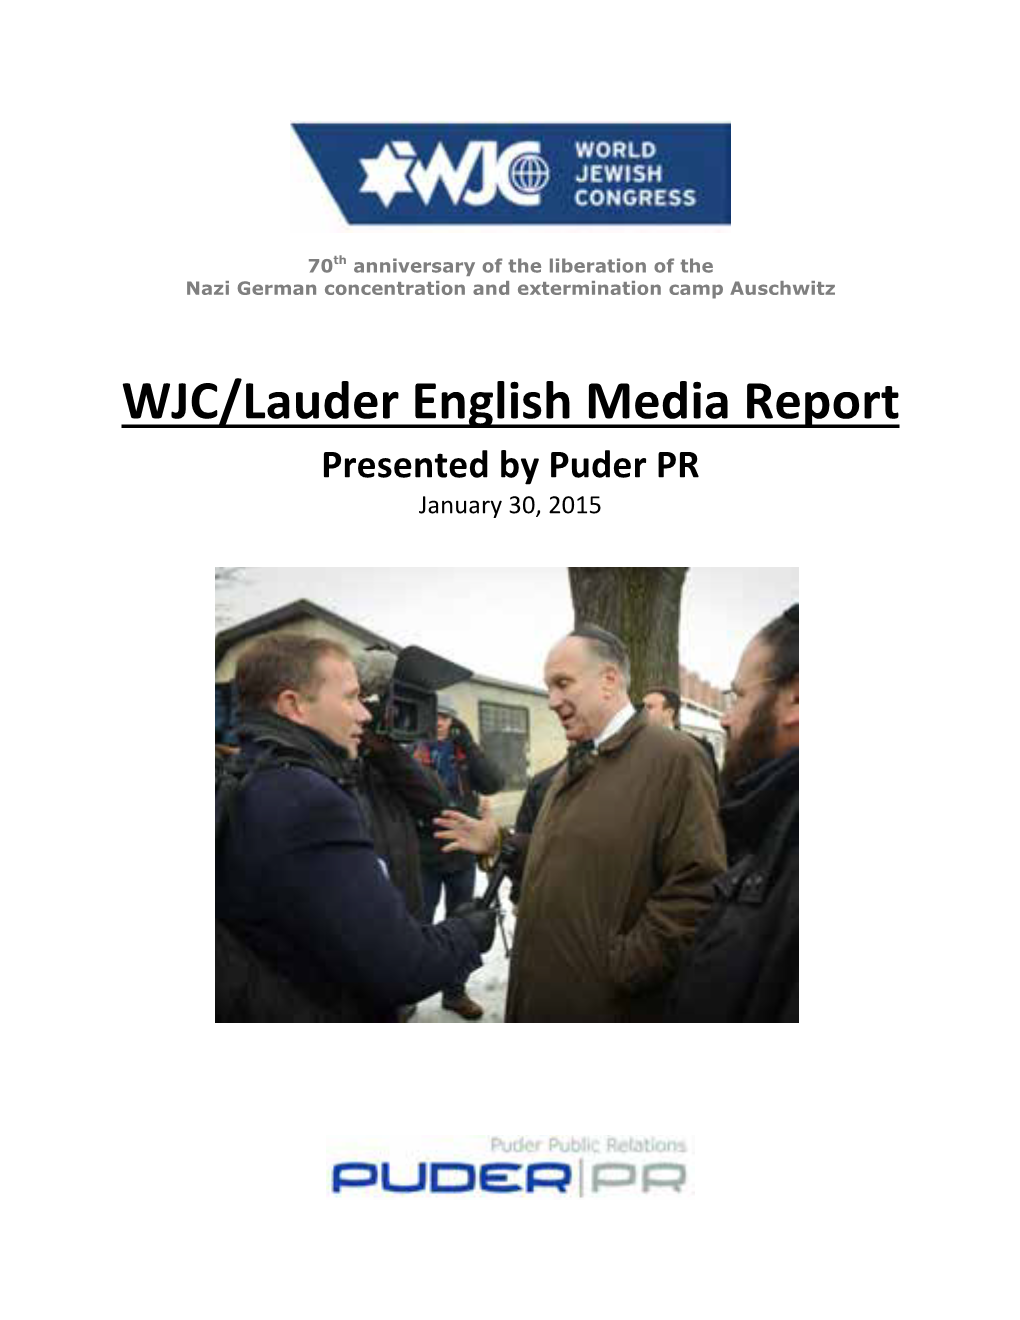 WJC/Lauder English Media Report